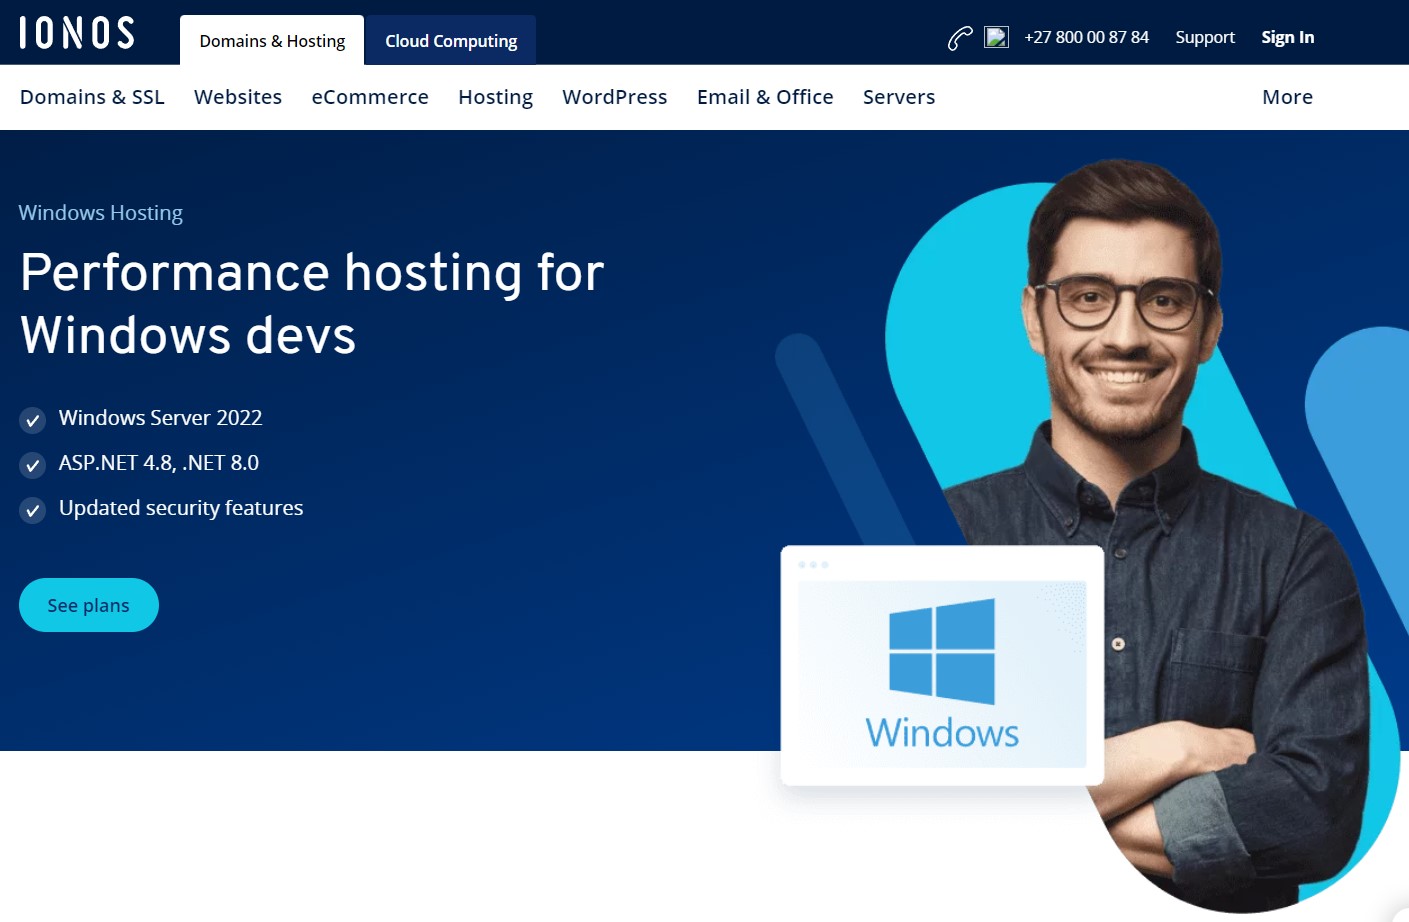 IONOS' Windows Hosting page